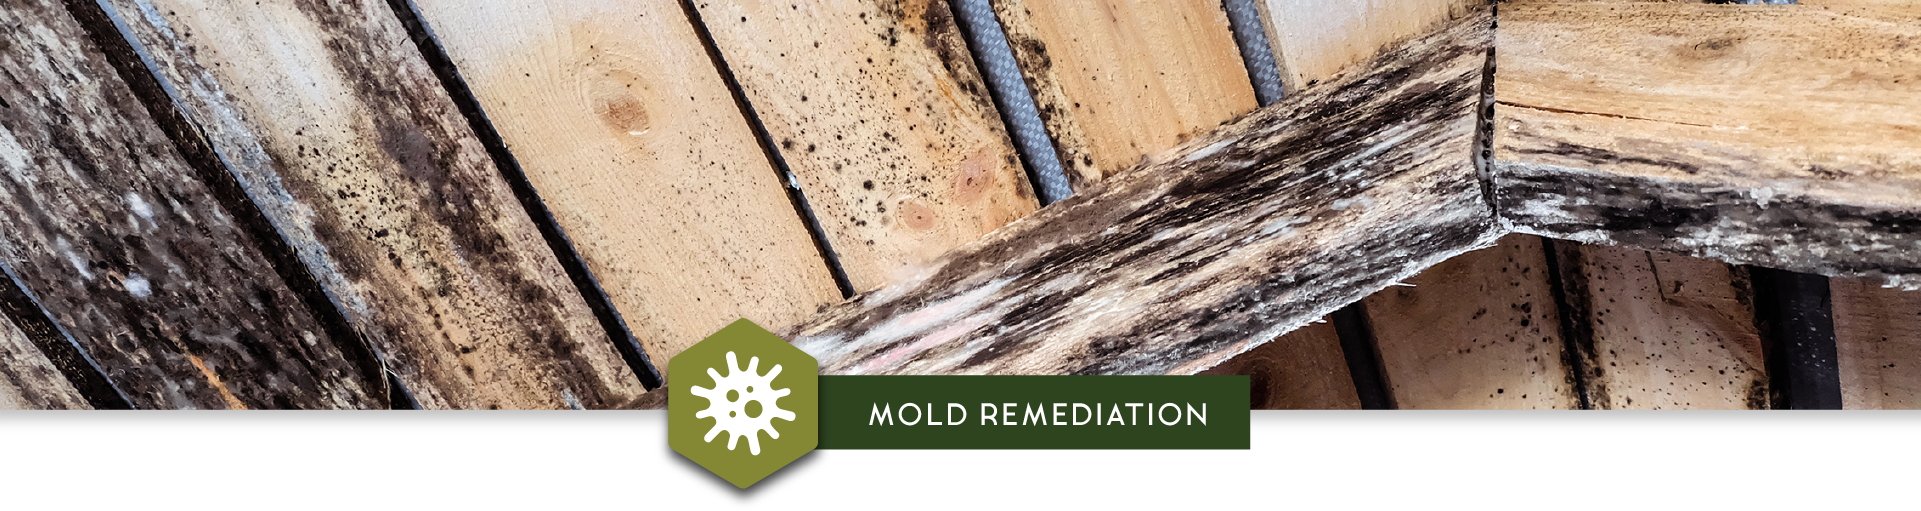 lead paint environmental remediation services